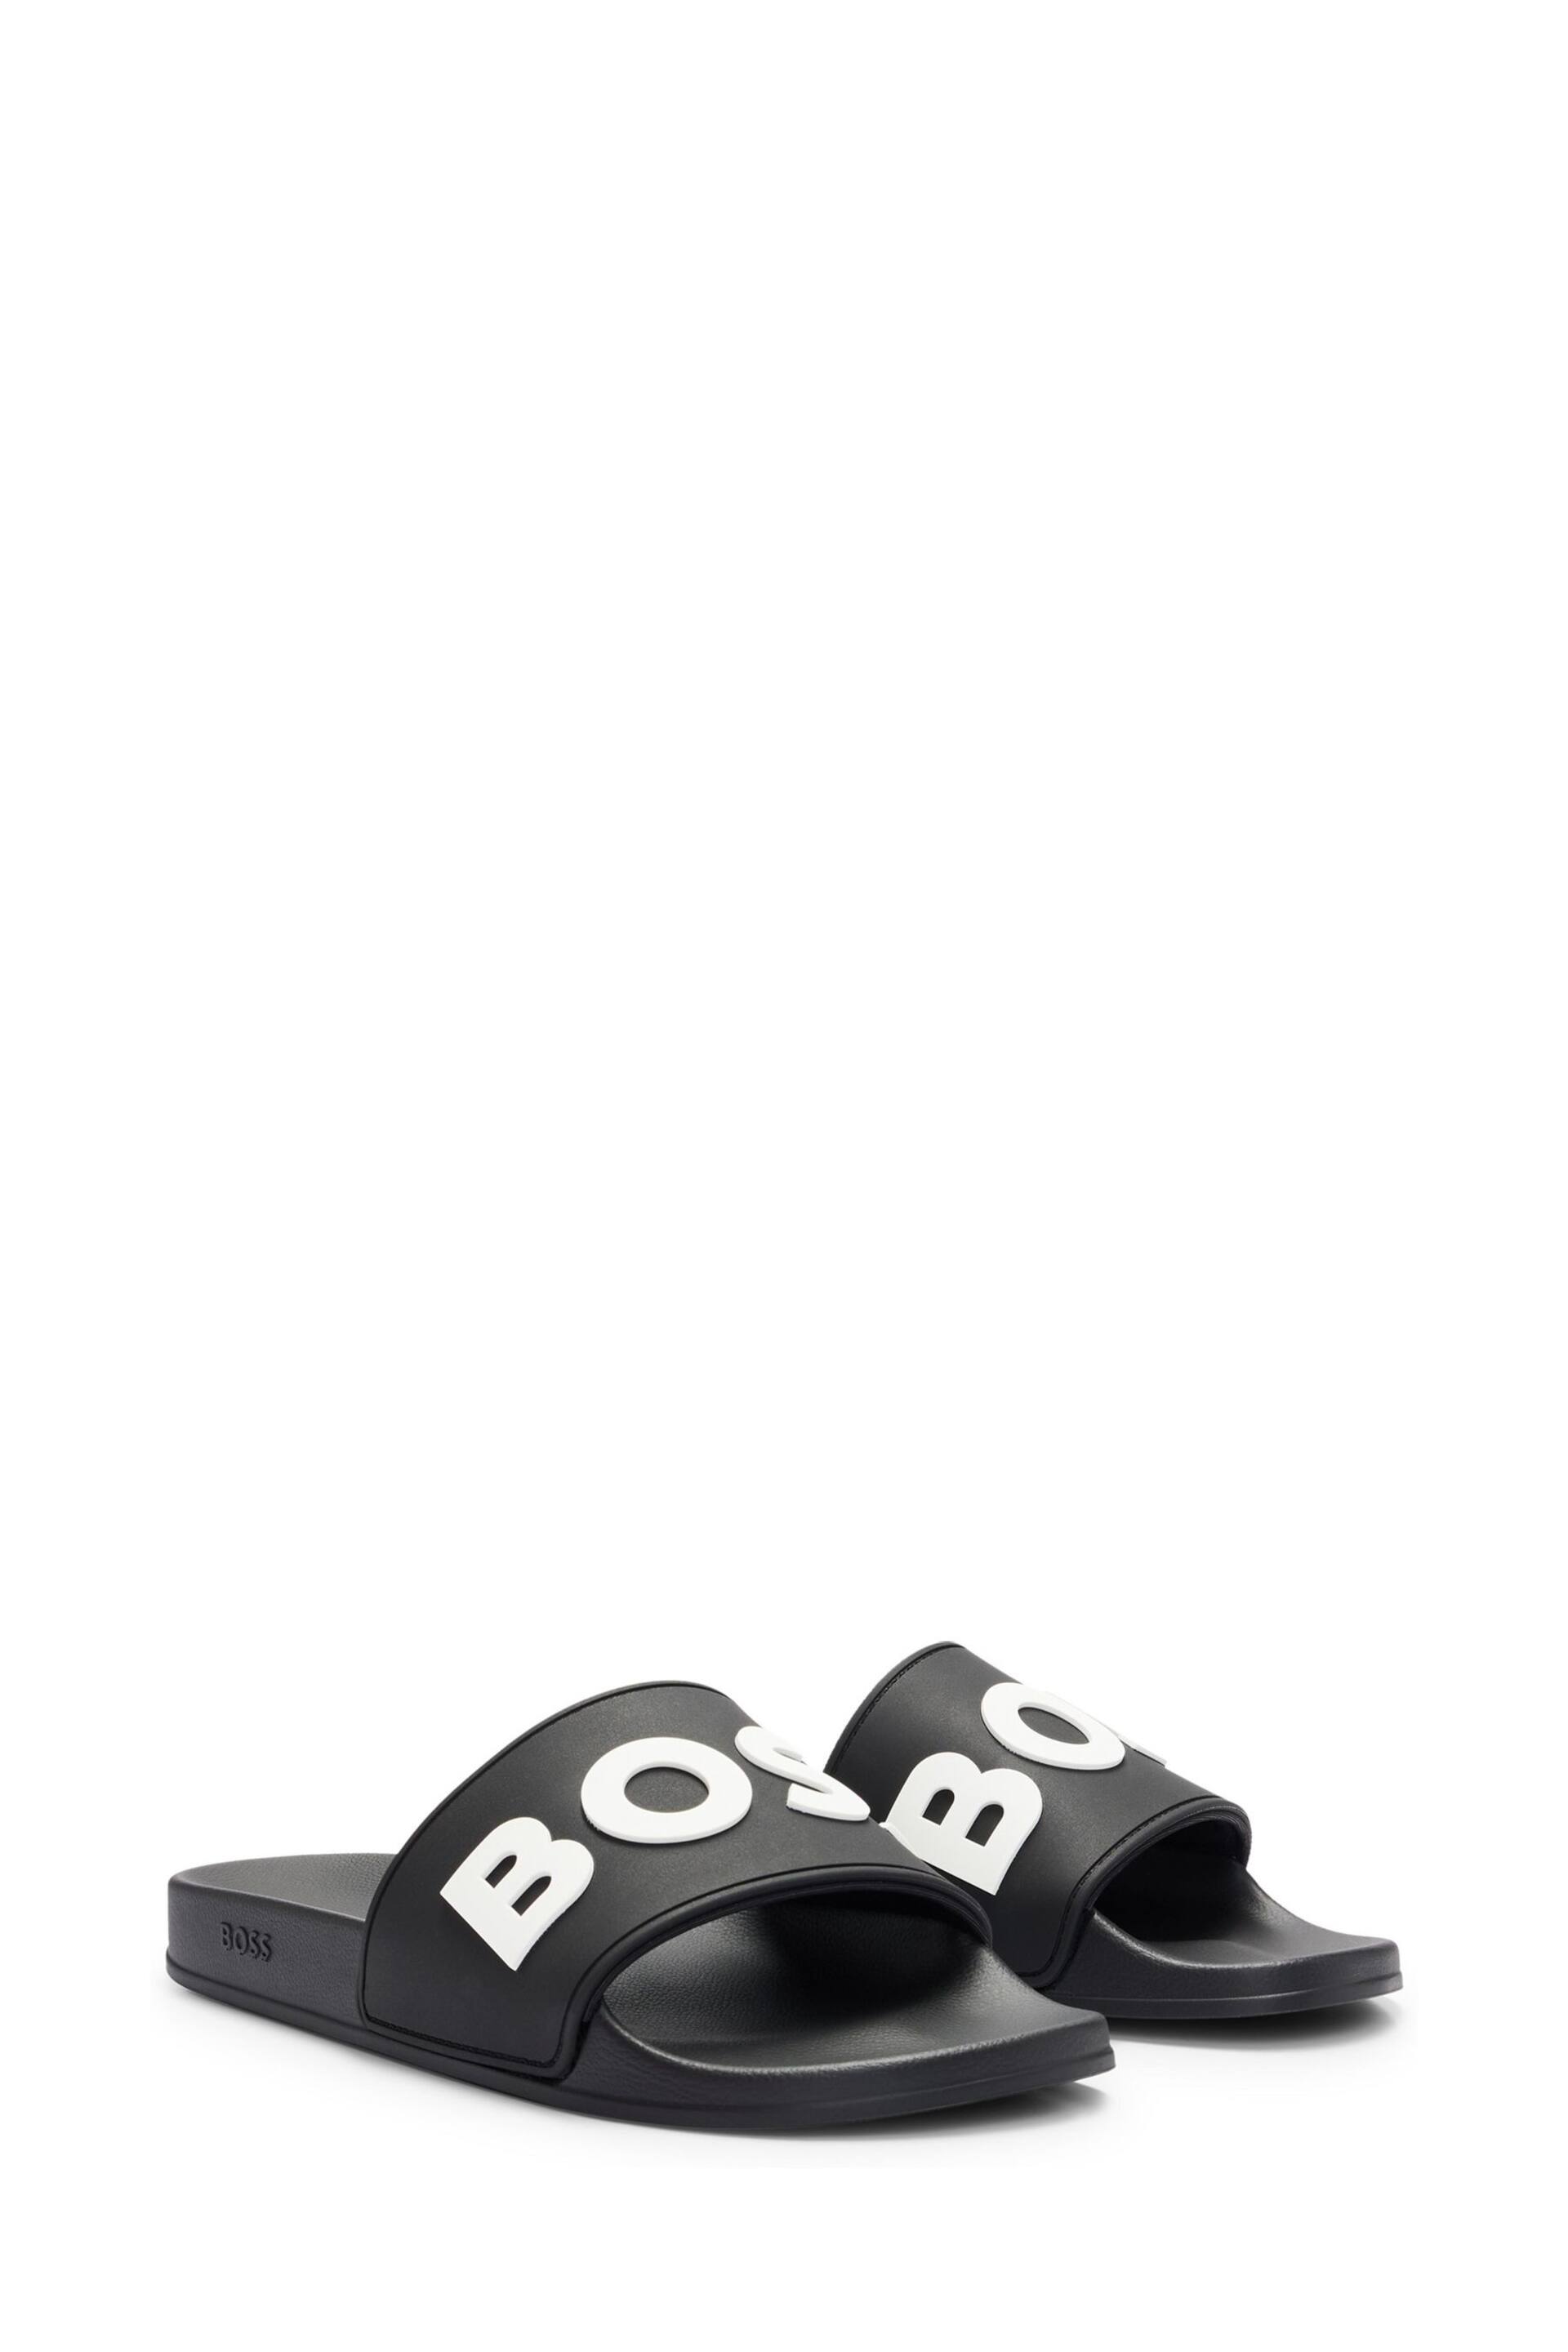 BOSS Black Crome Kirk Rubber Sliders - Image 2 of 4